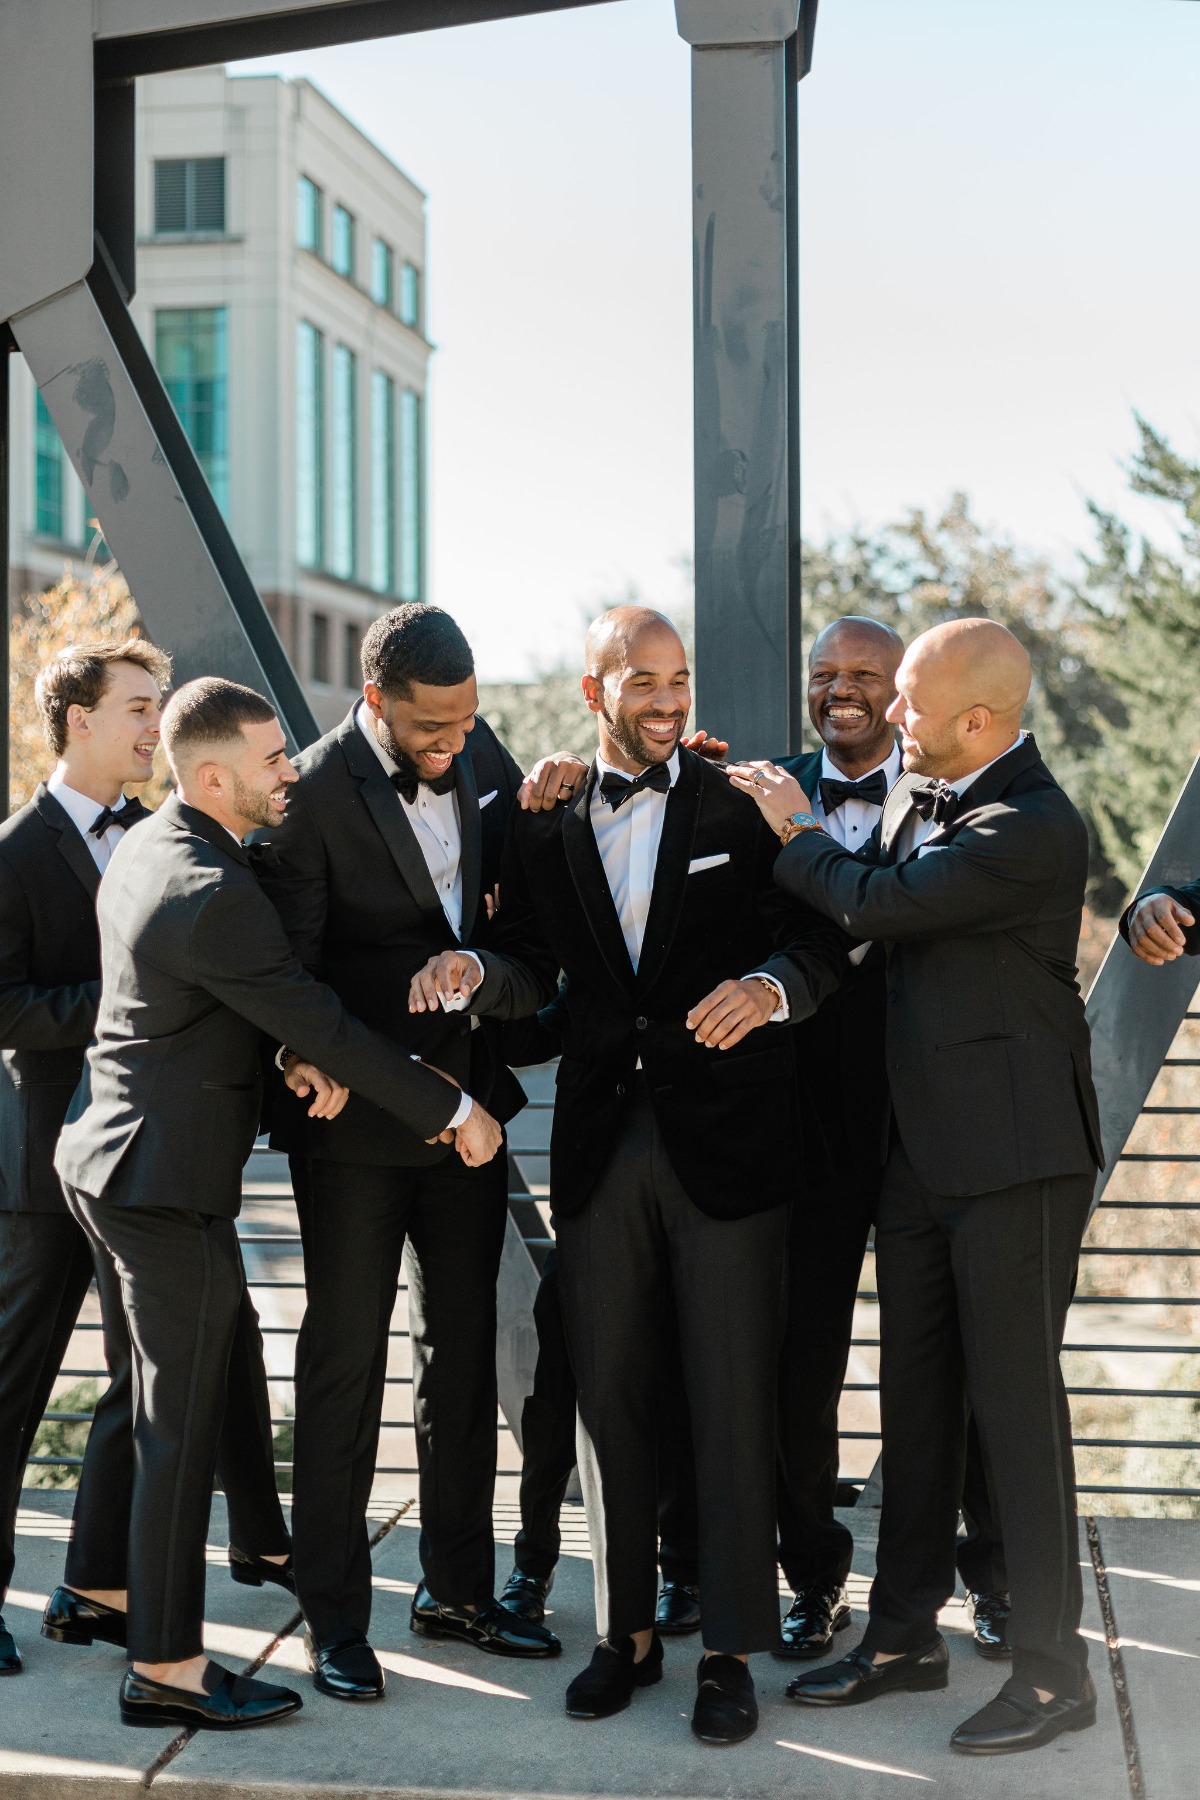 Timeless Wedding In Black, White, & Blush That Will Melt Your Heart